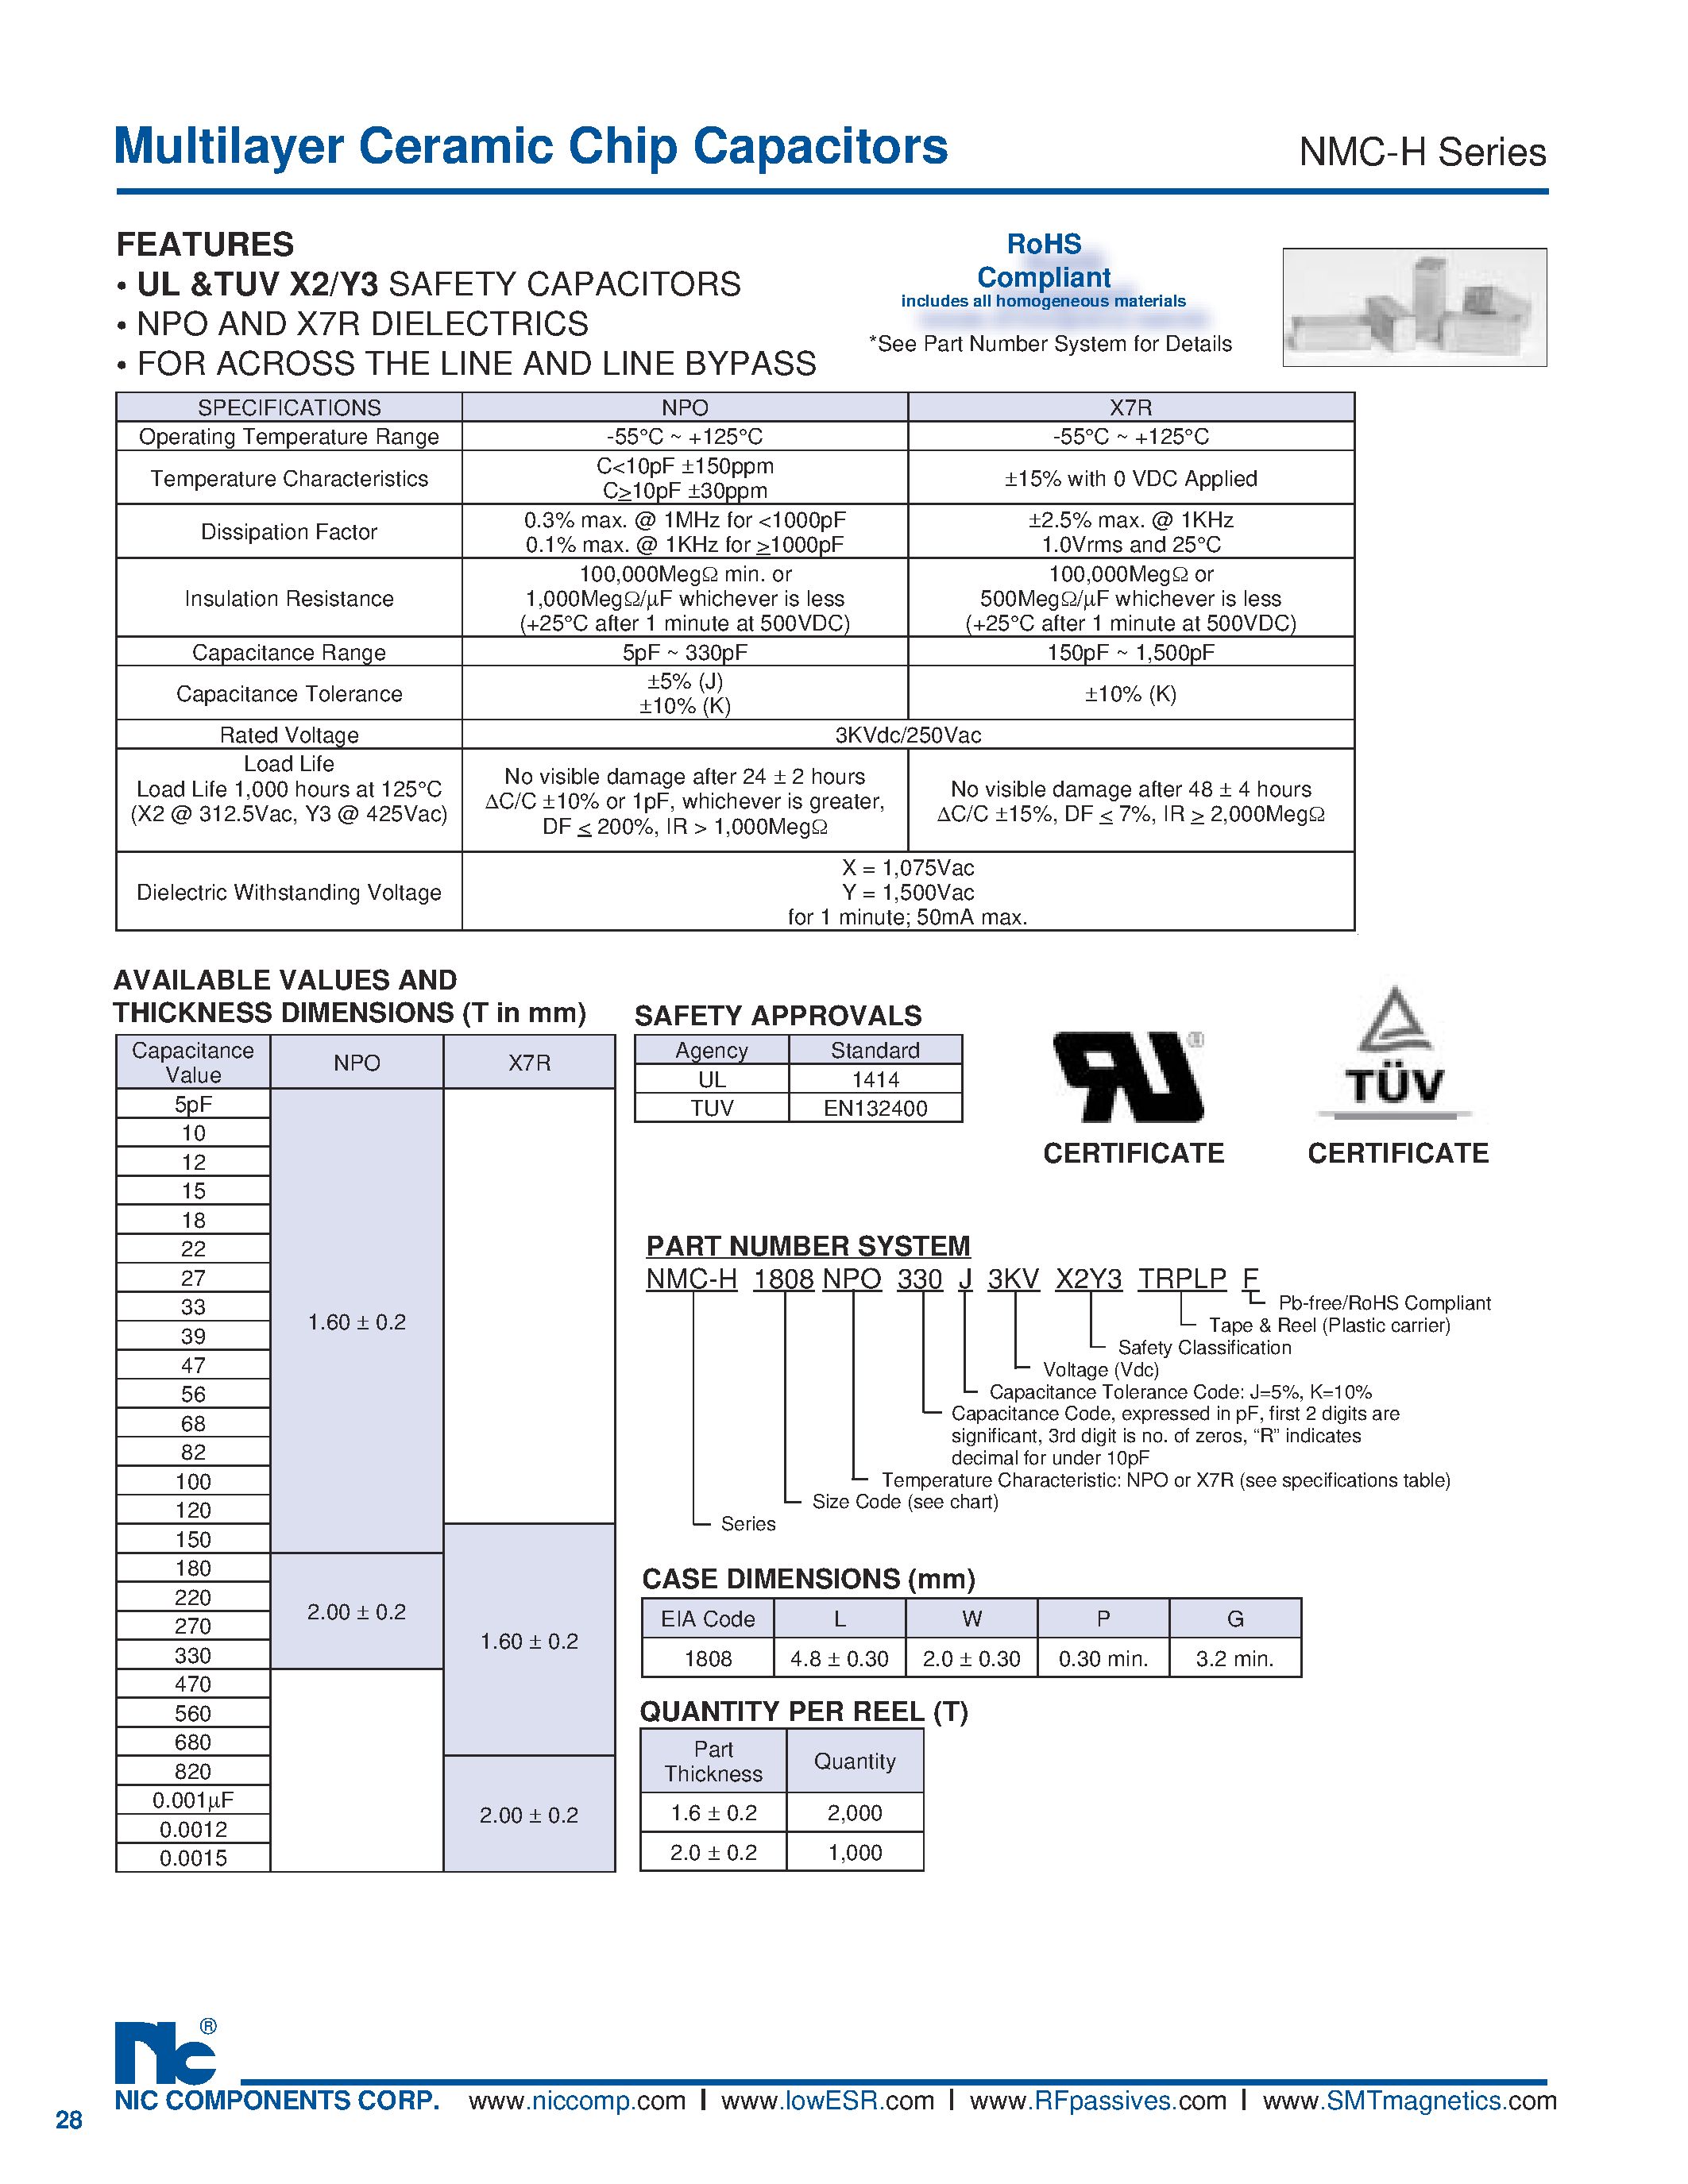 Datasheet NHC-H - Multilayer Ceramic Chip Capacitors page 2